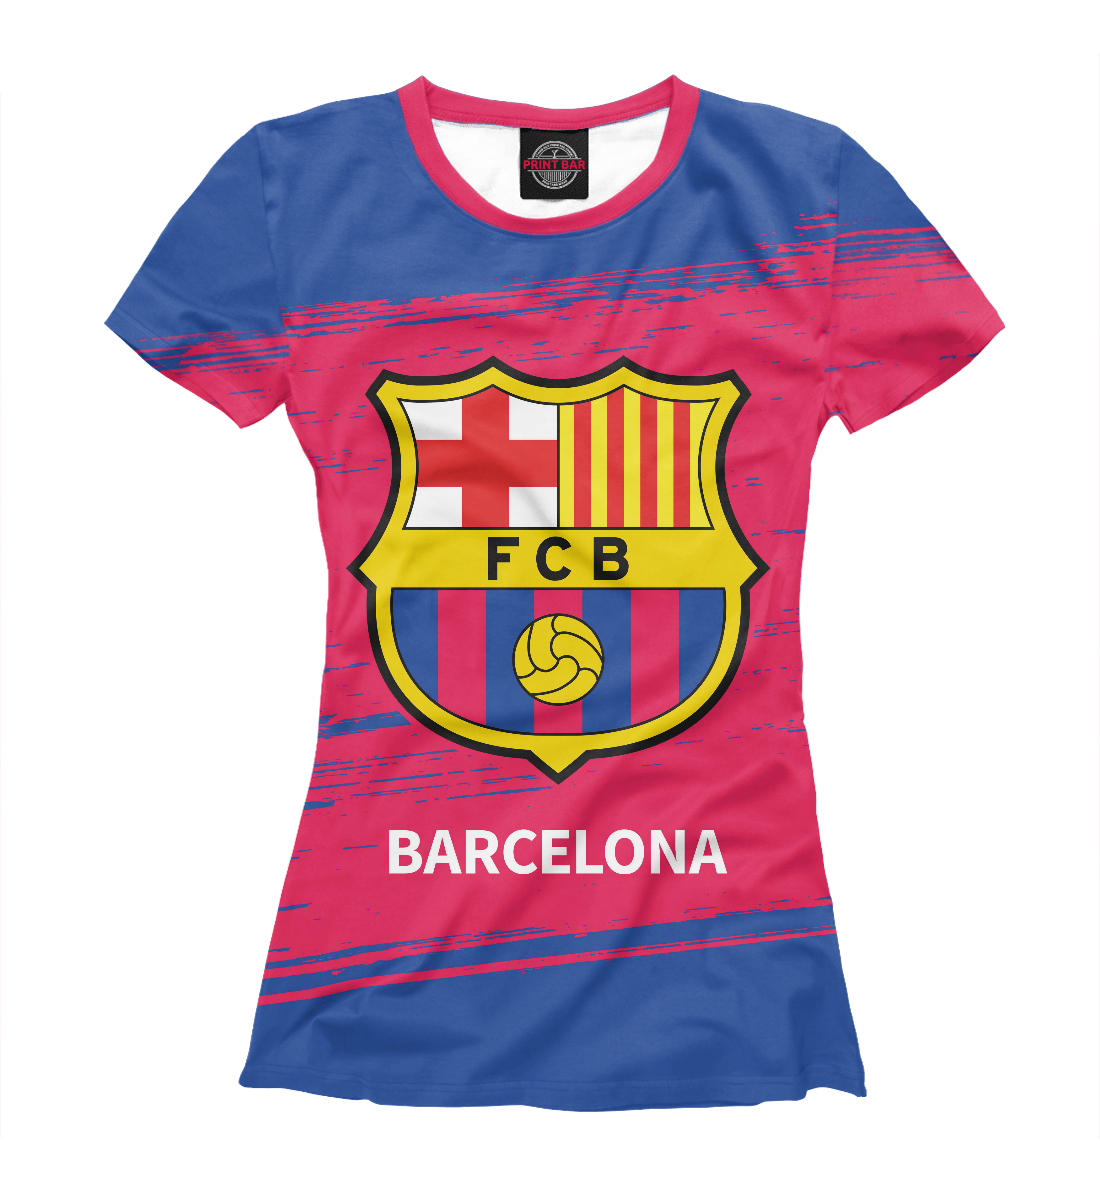 Женская Футболка Barcelona / Барселона, артикул BAR-635352-fut-1mp